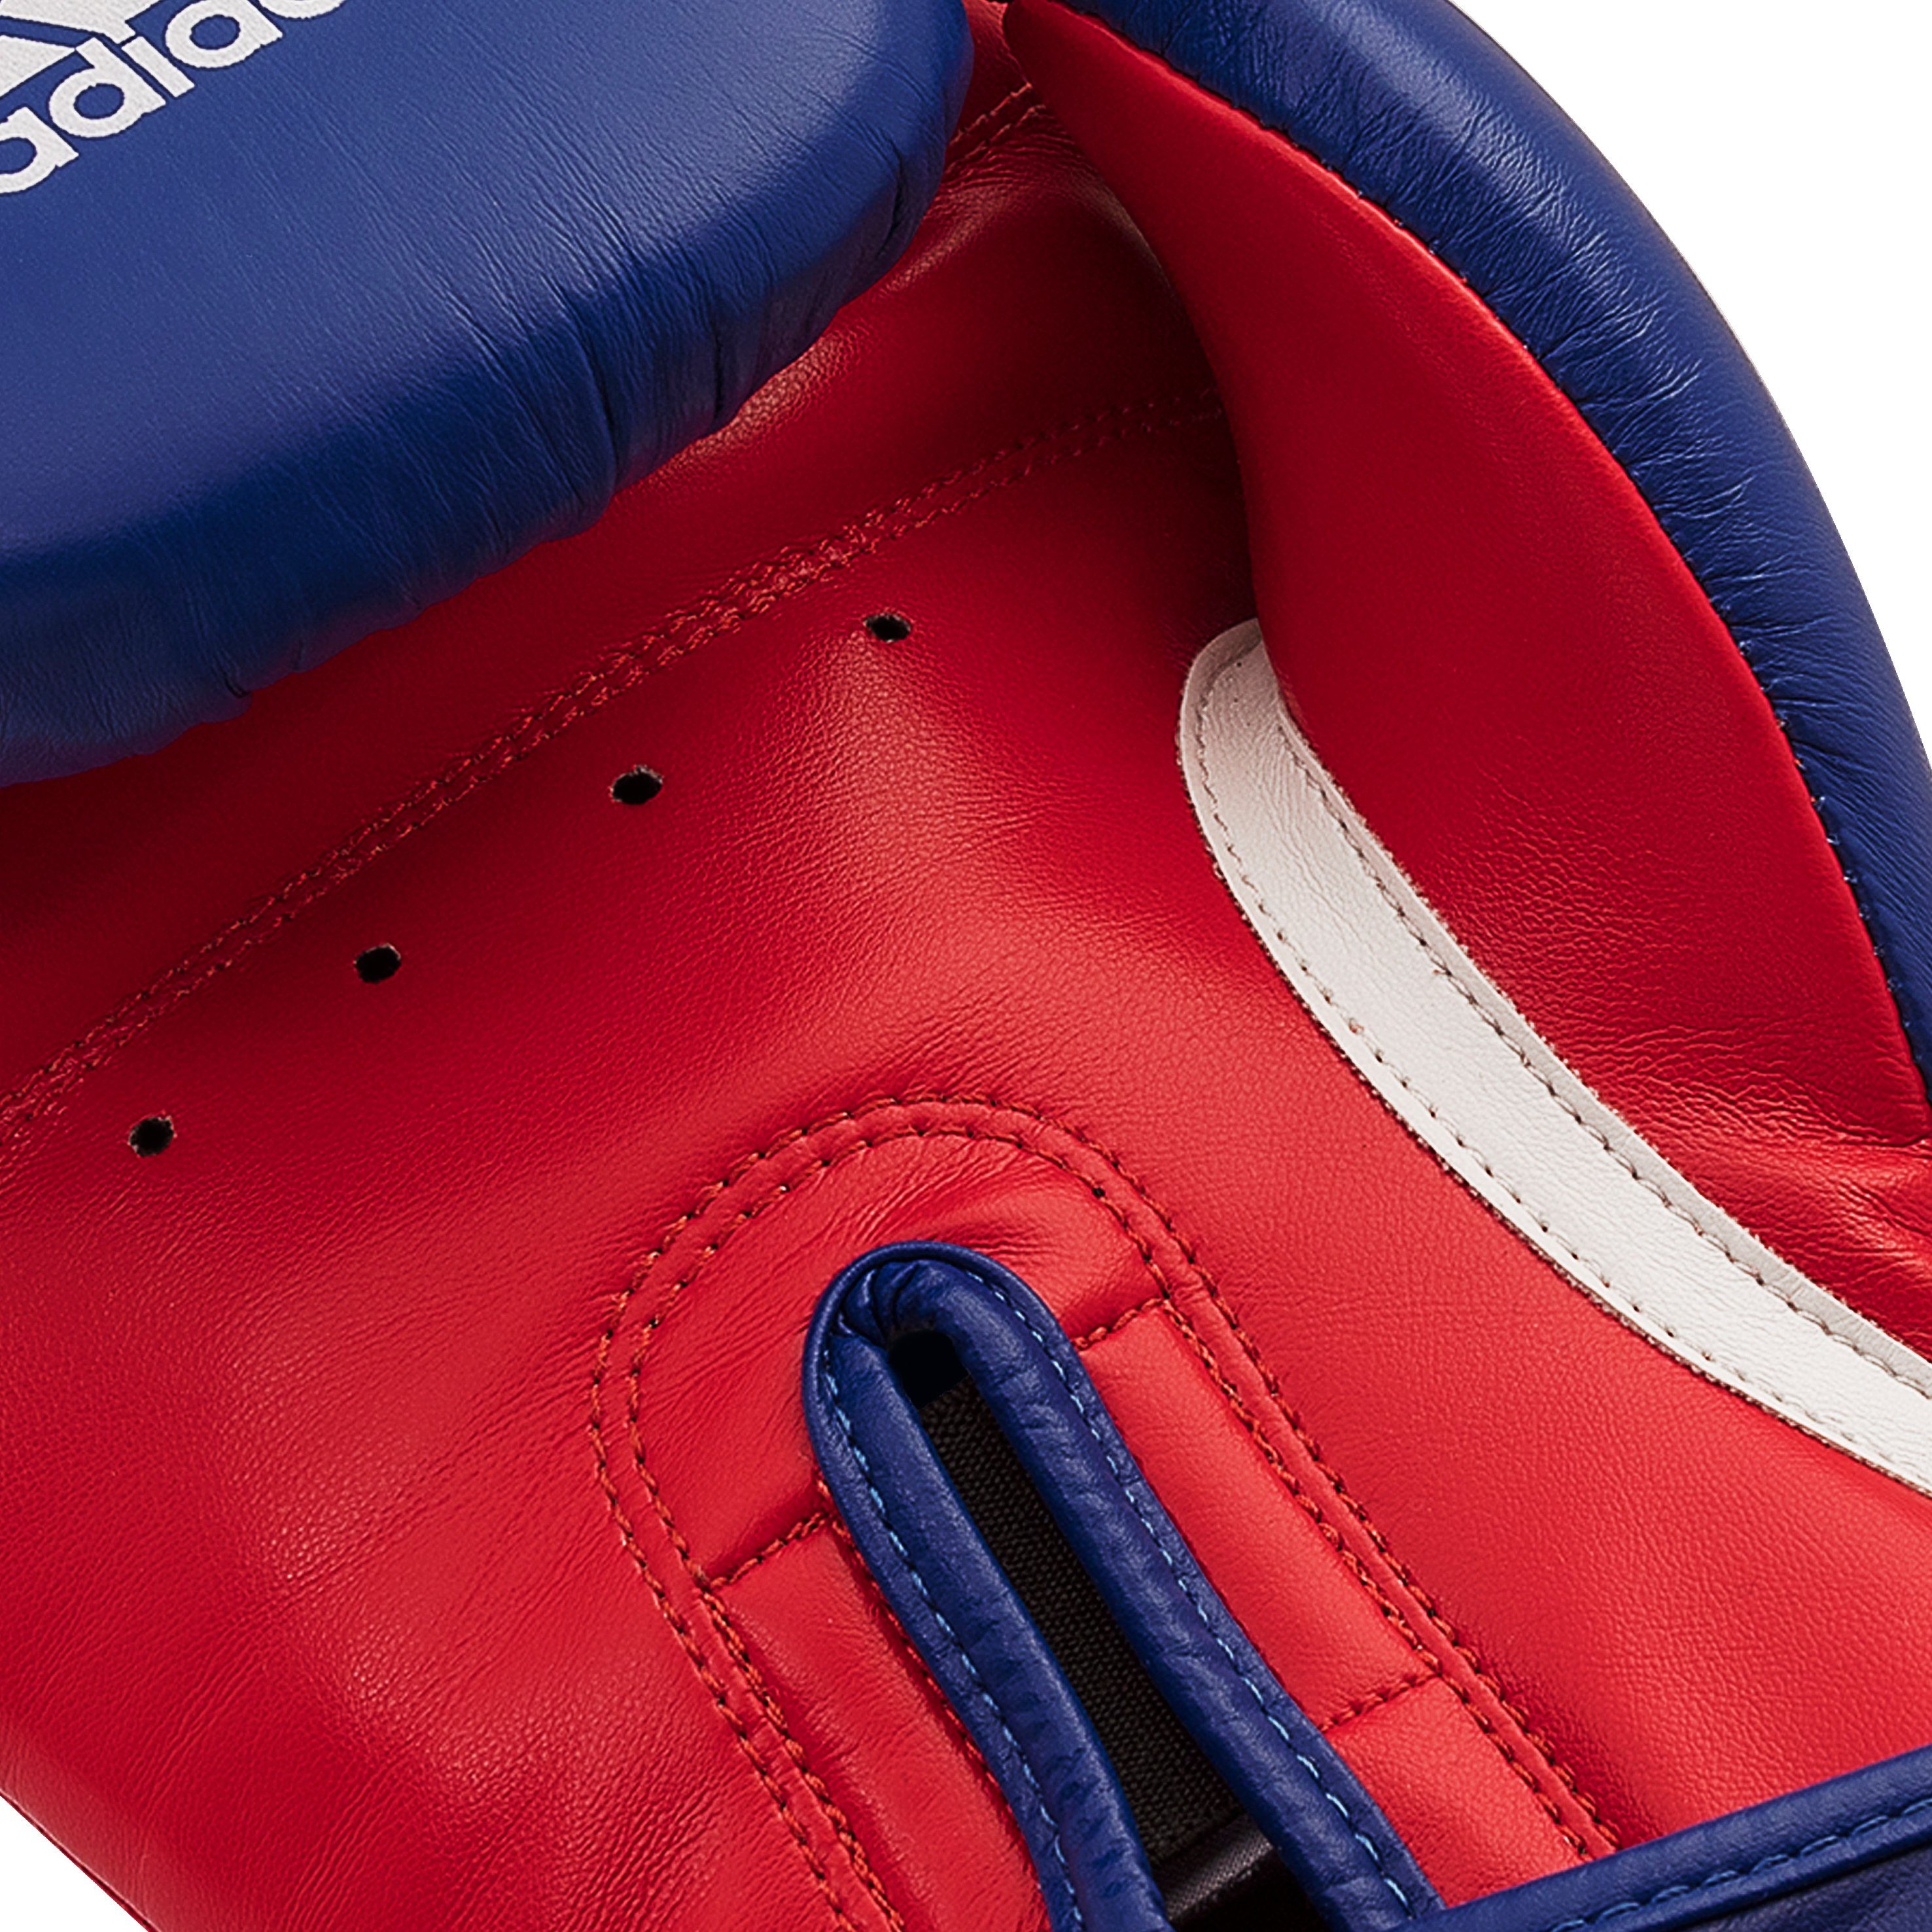 adidas Performance Boxhandschuhe blau/rot